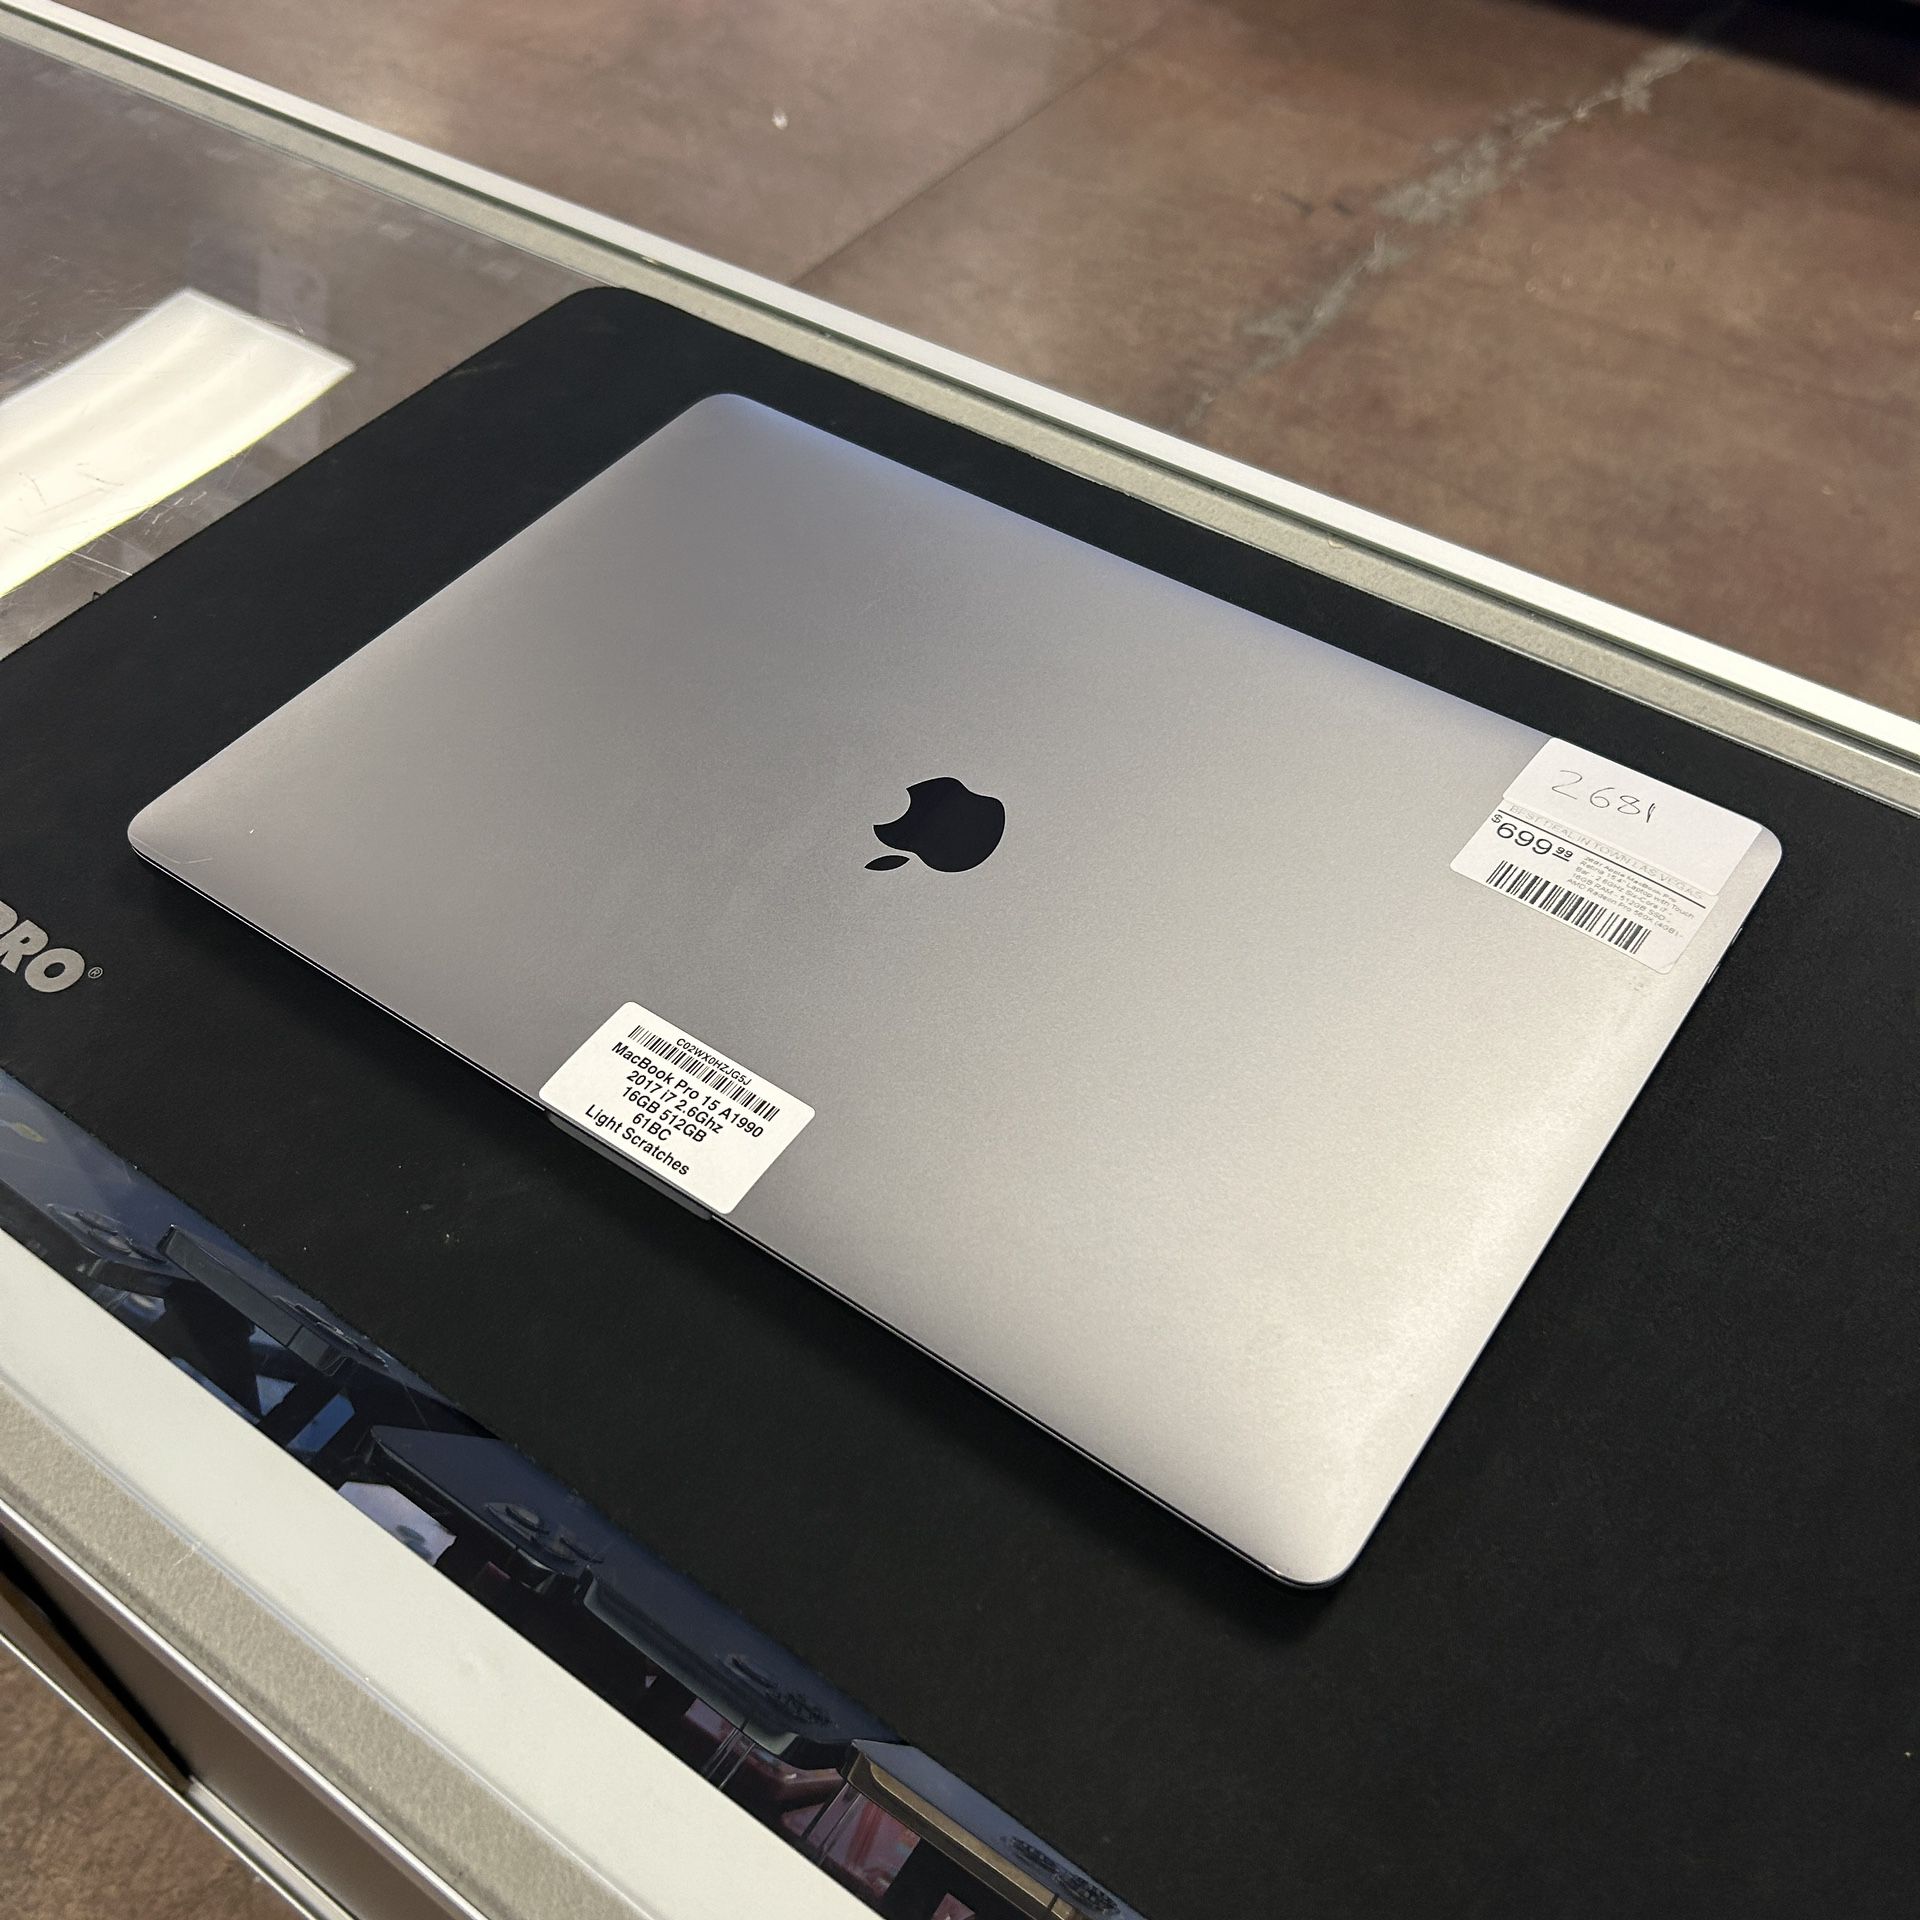 MacBook Pro 15” Laptop - i7 16GB RAM 512GB SSD